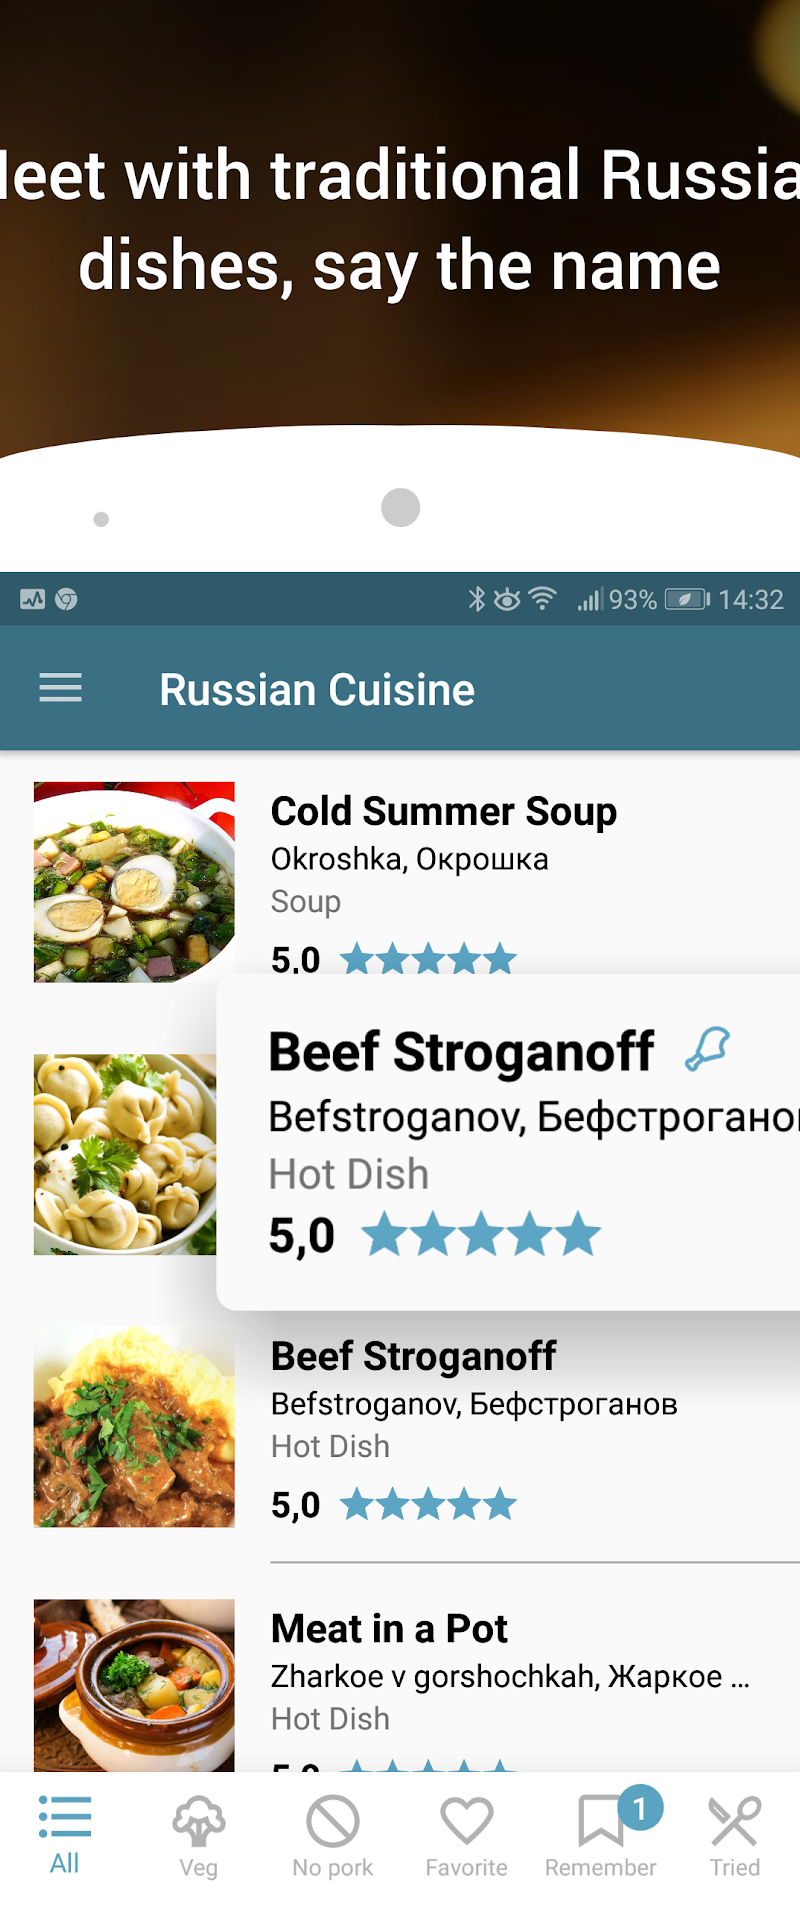 Russian cuisine